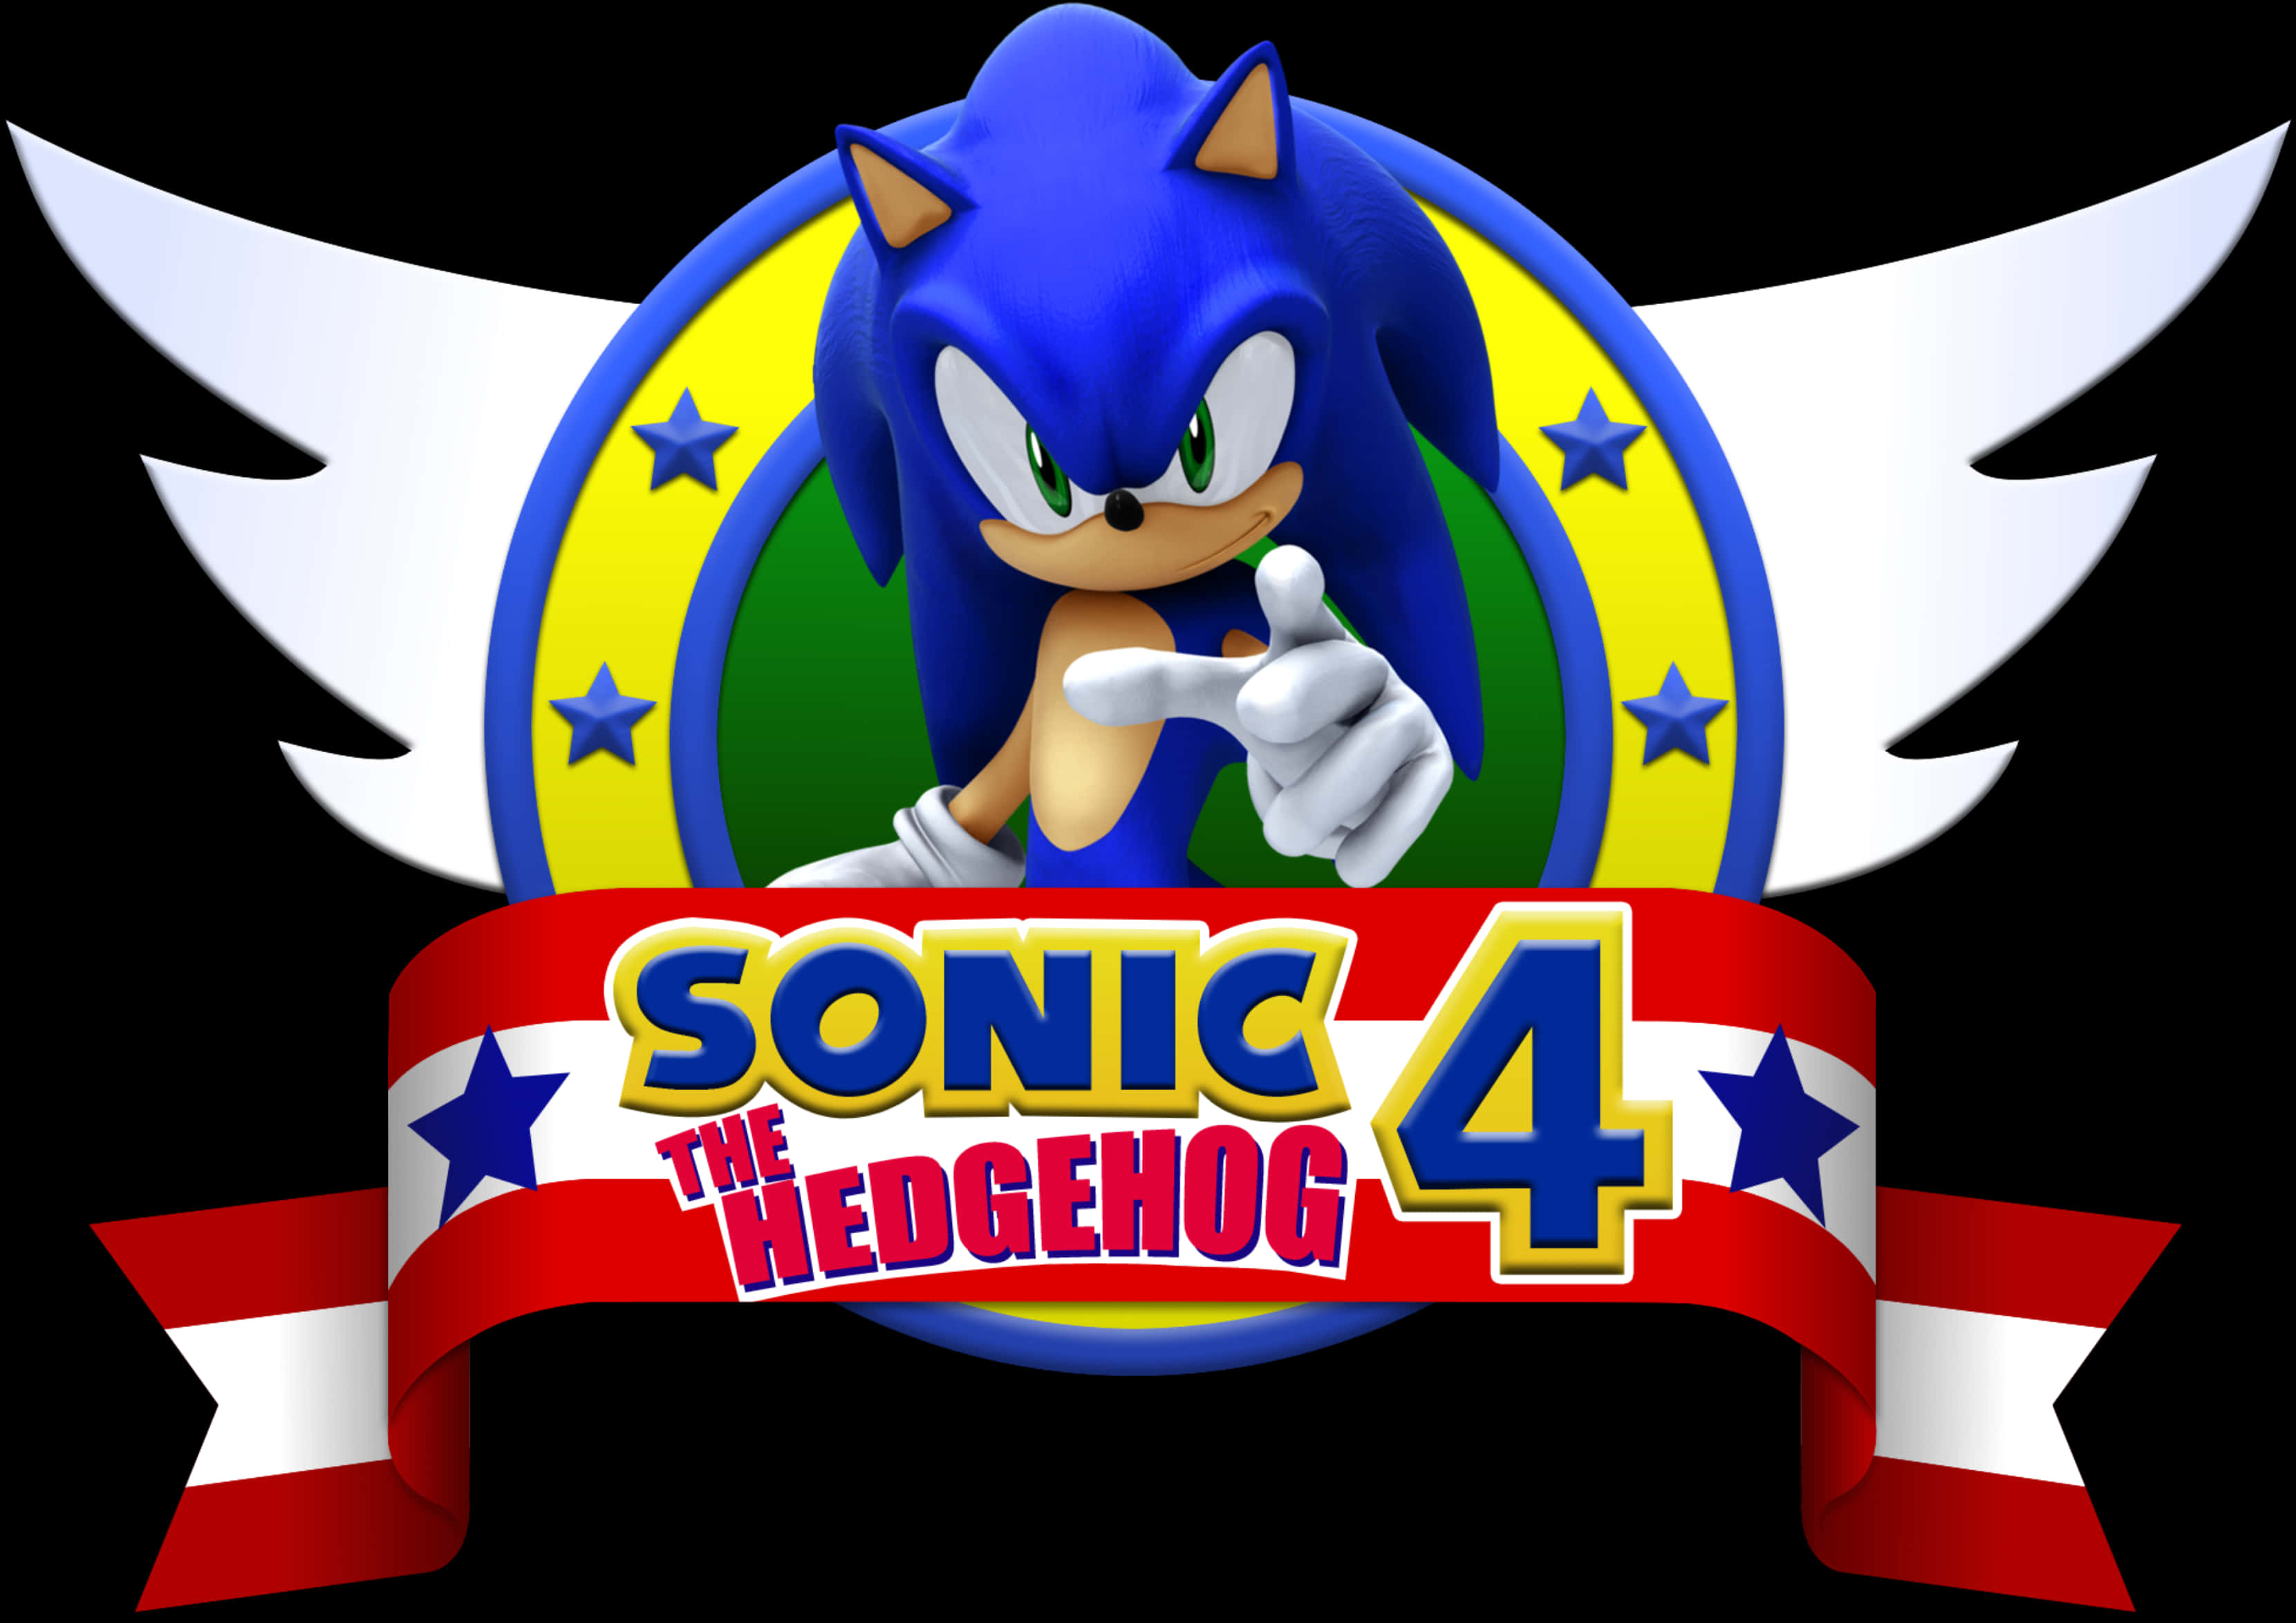 Sonic The Hedgehog4 Logo